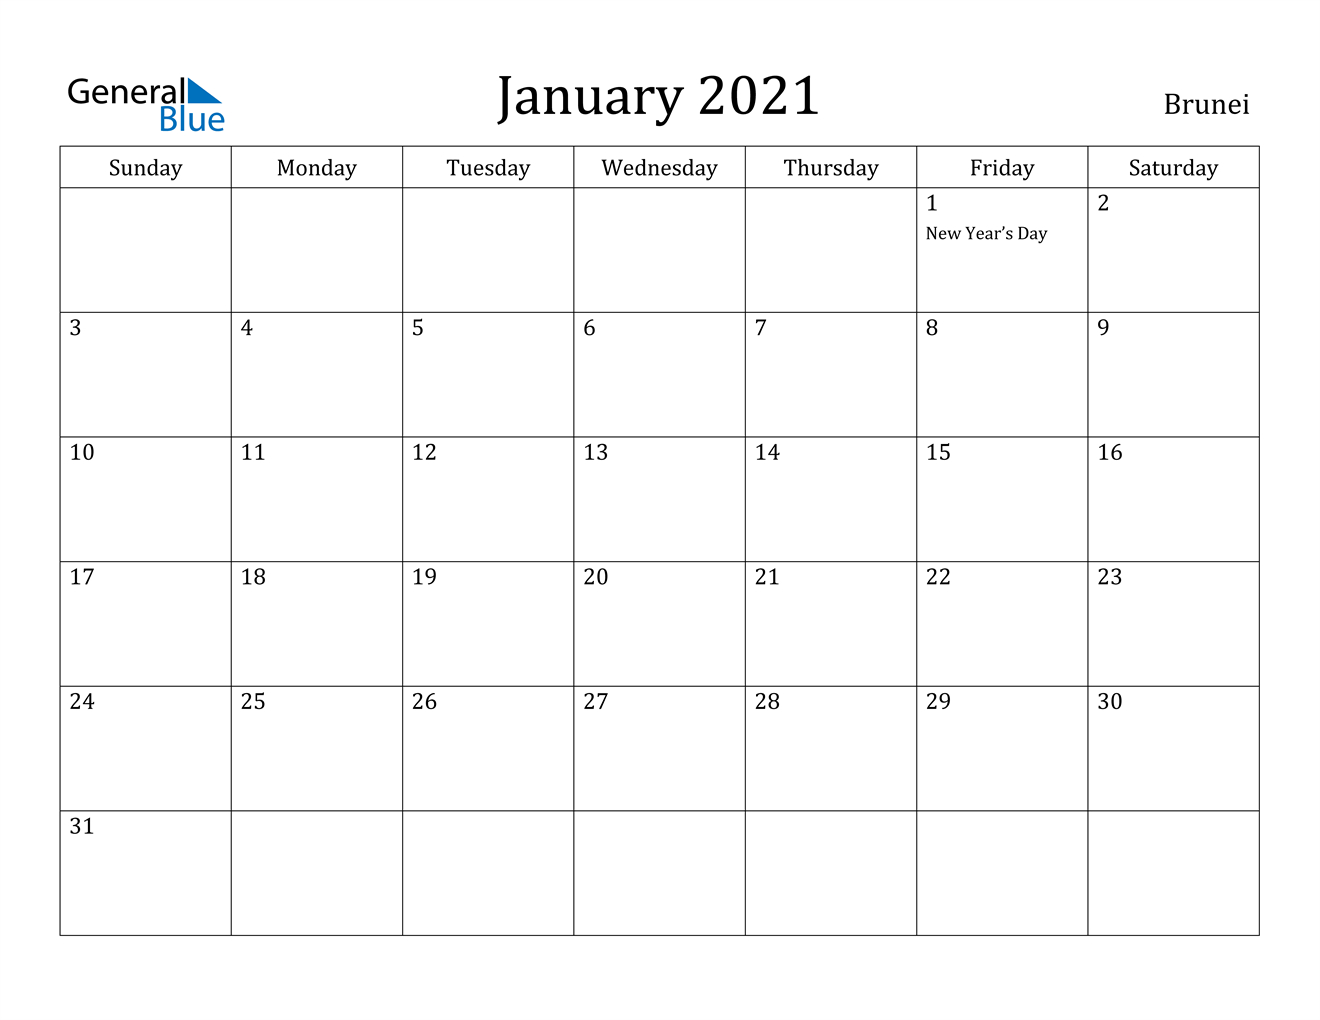 January 2021 Calendar Brunei